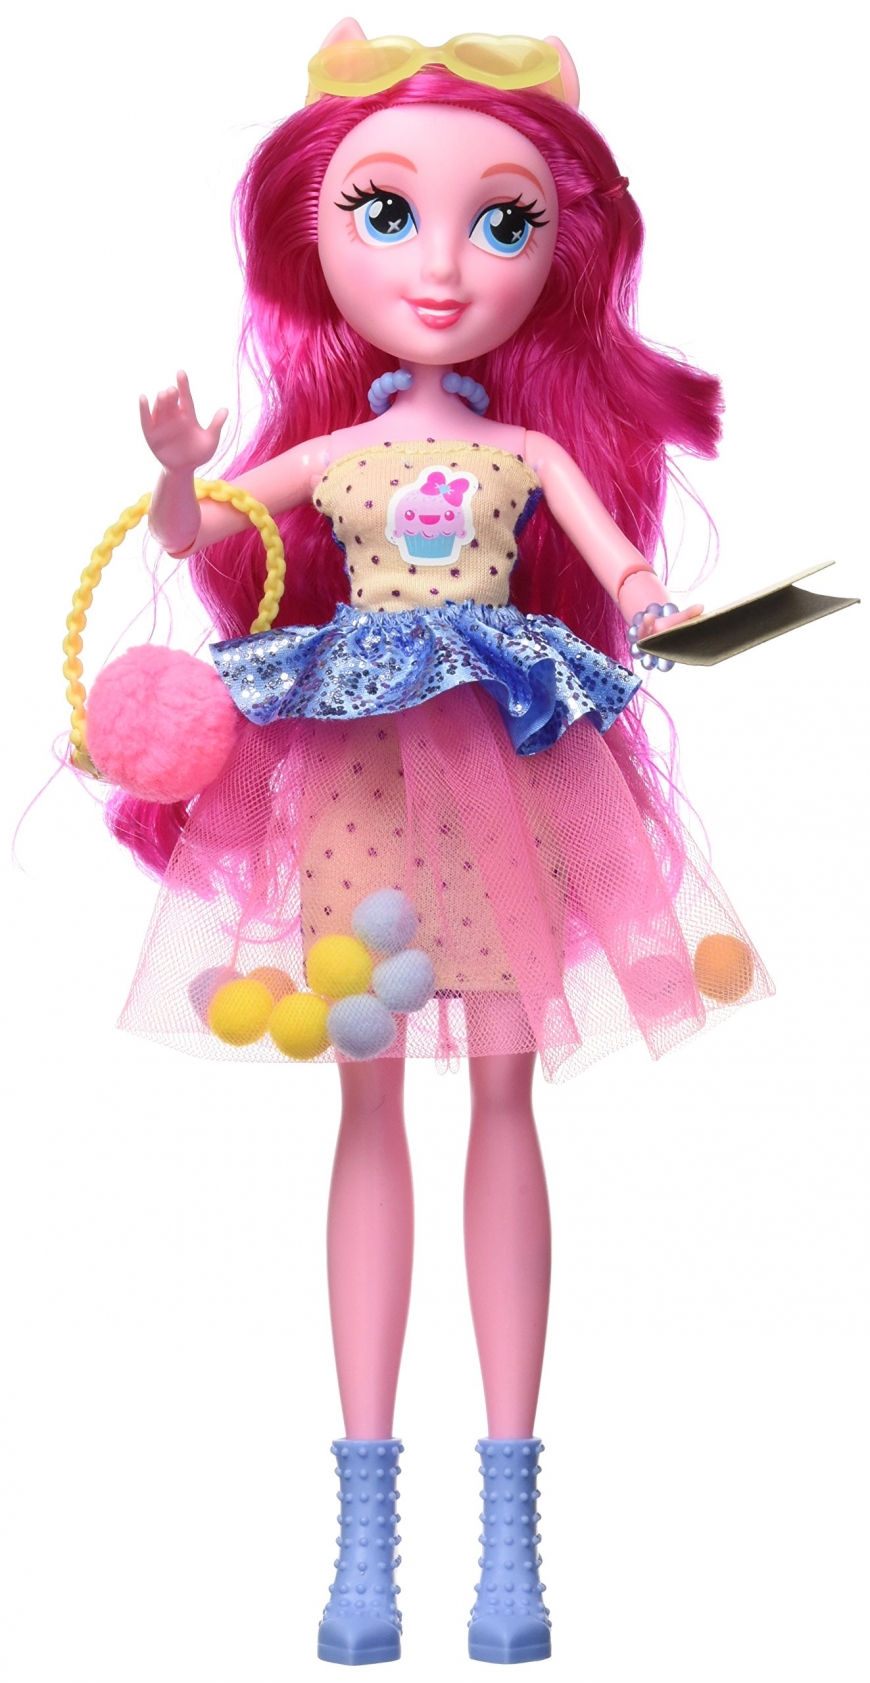 Equestria Girls Deluxe Pinkie Pie Fashion Doll